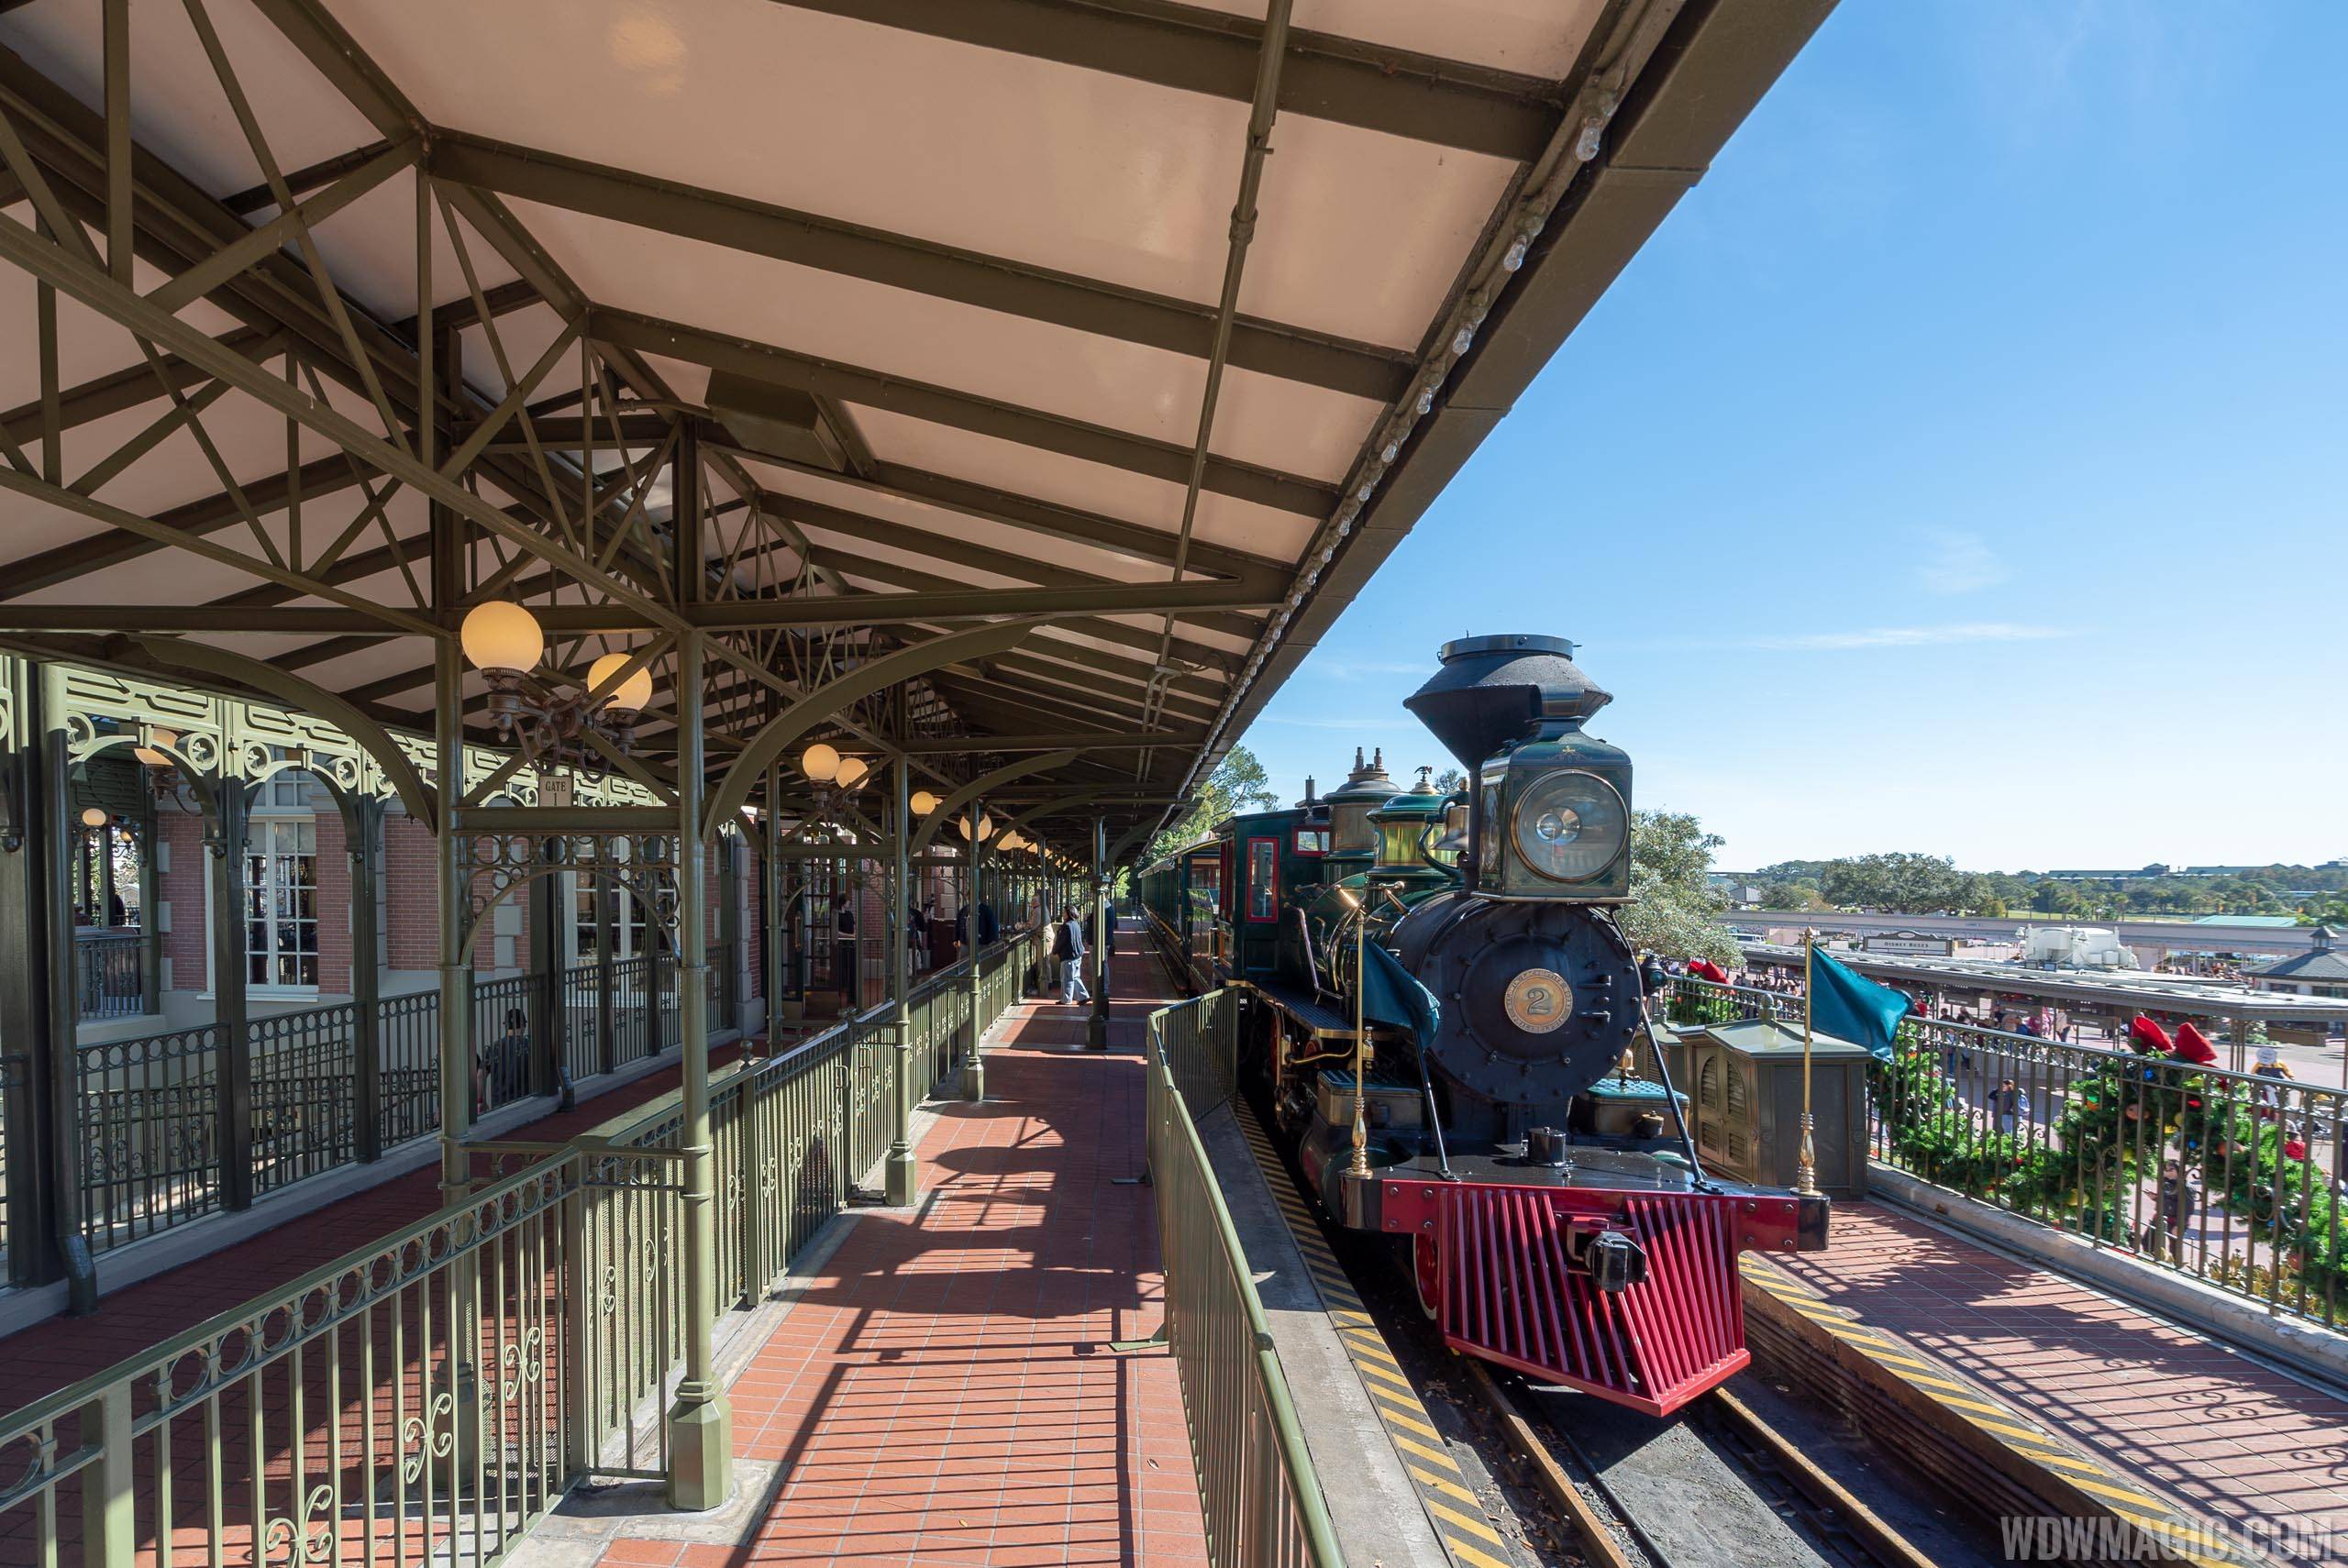 Walt Disney World Railroad static exhibit will move to Fantasyland